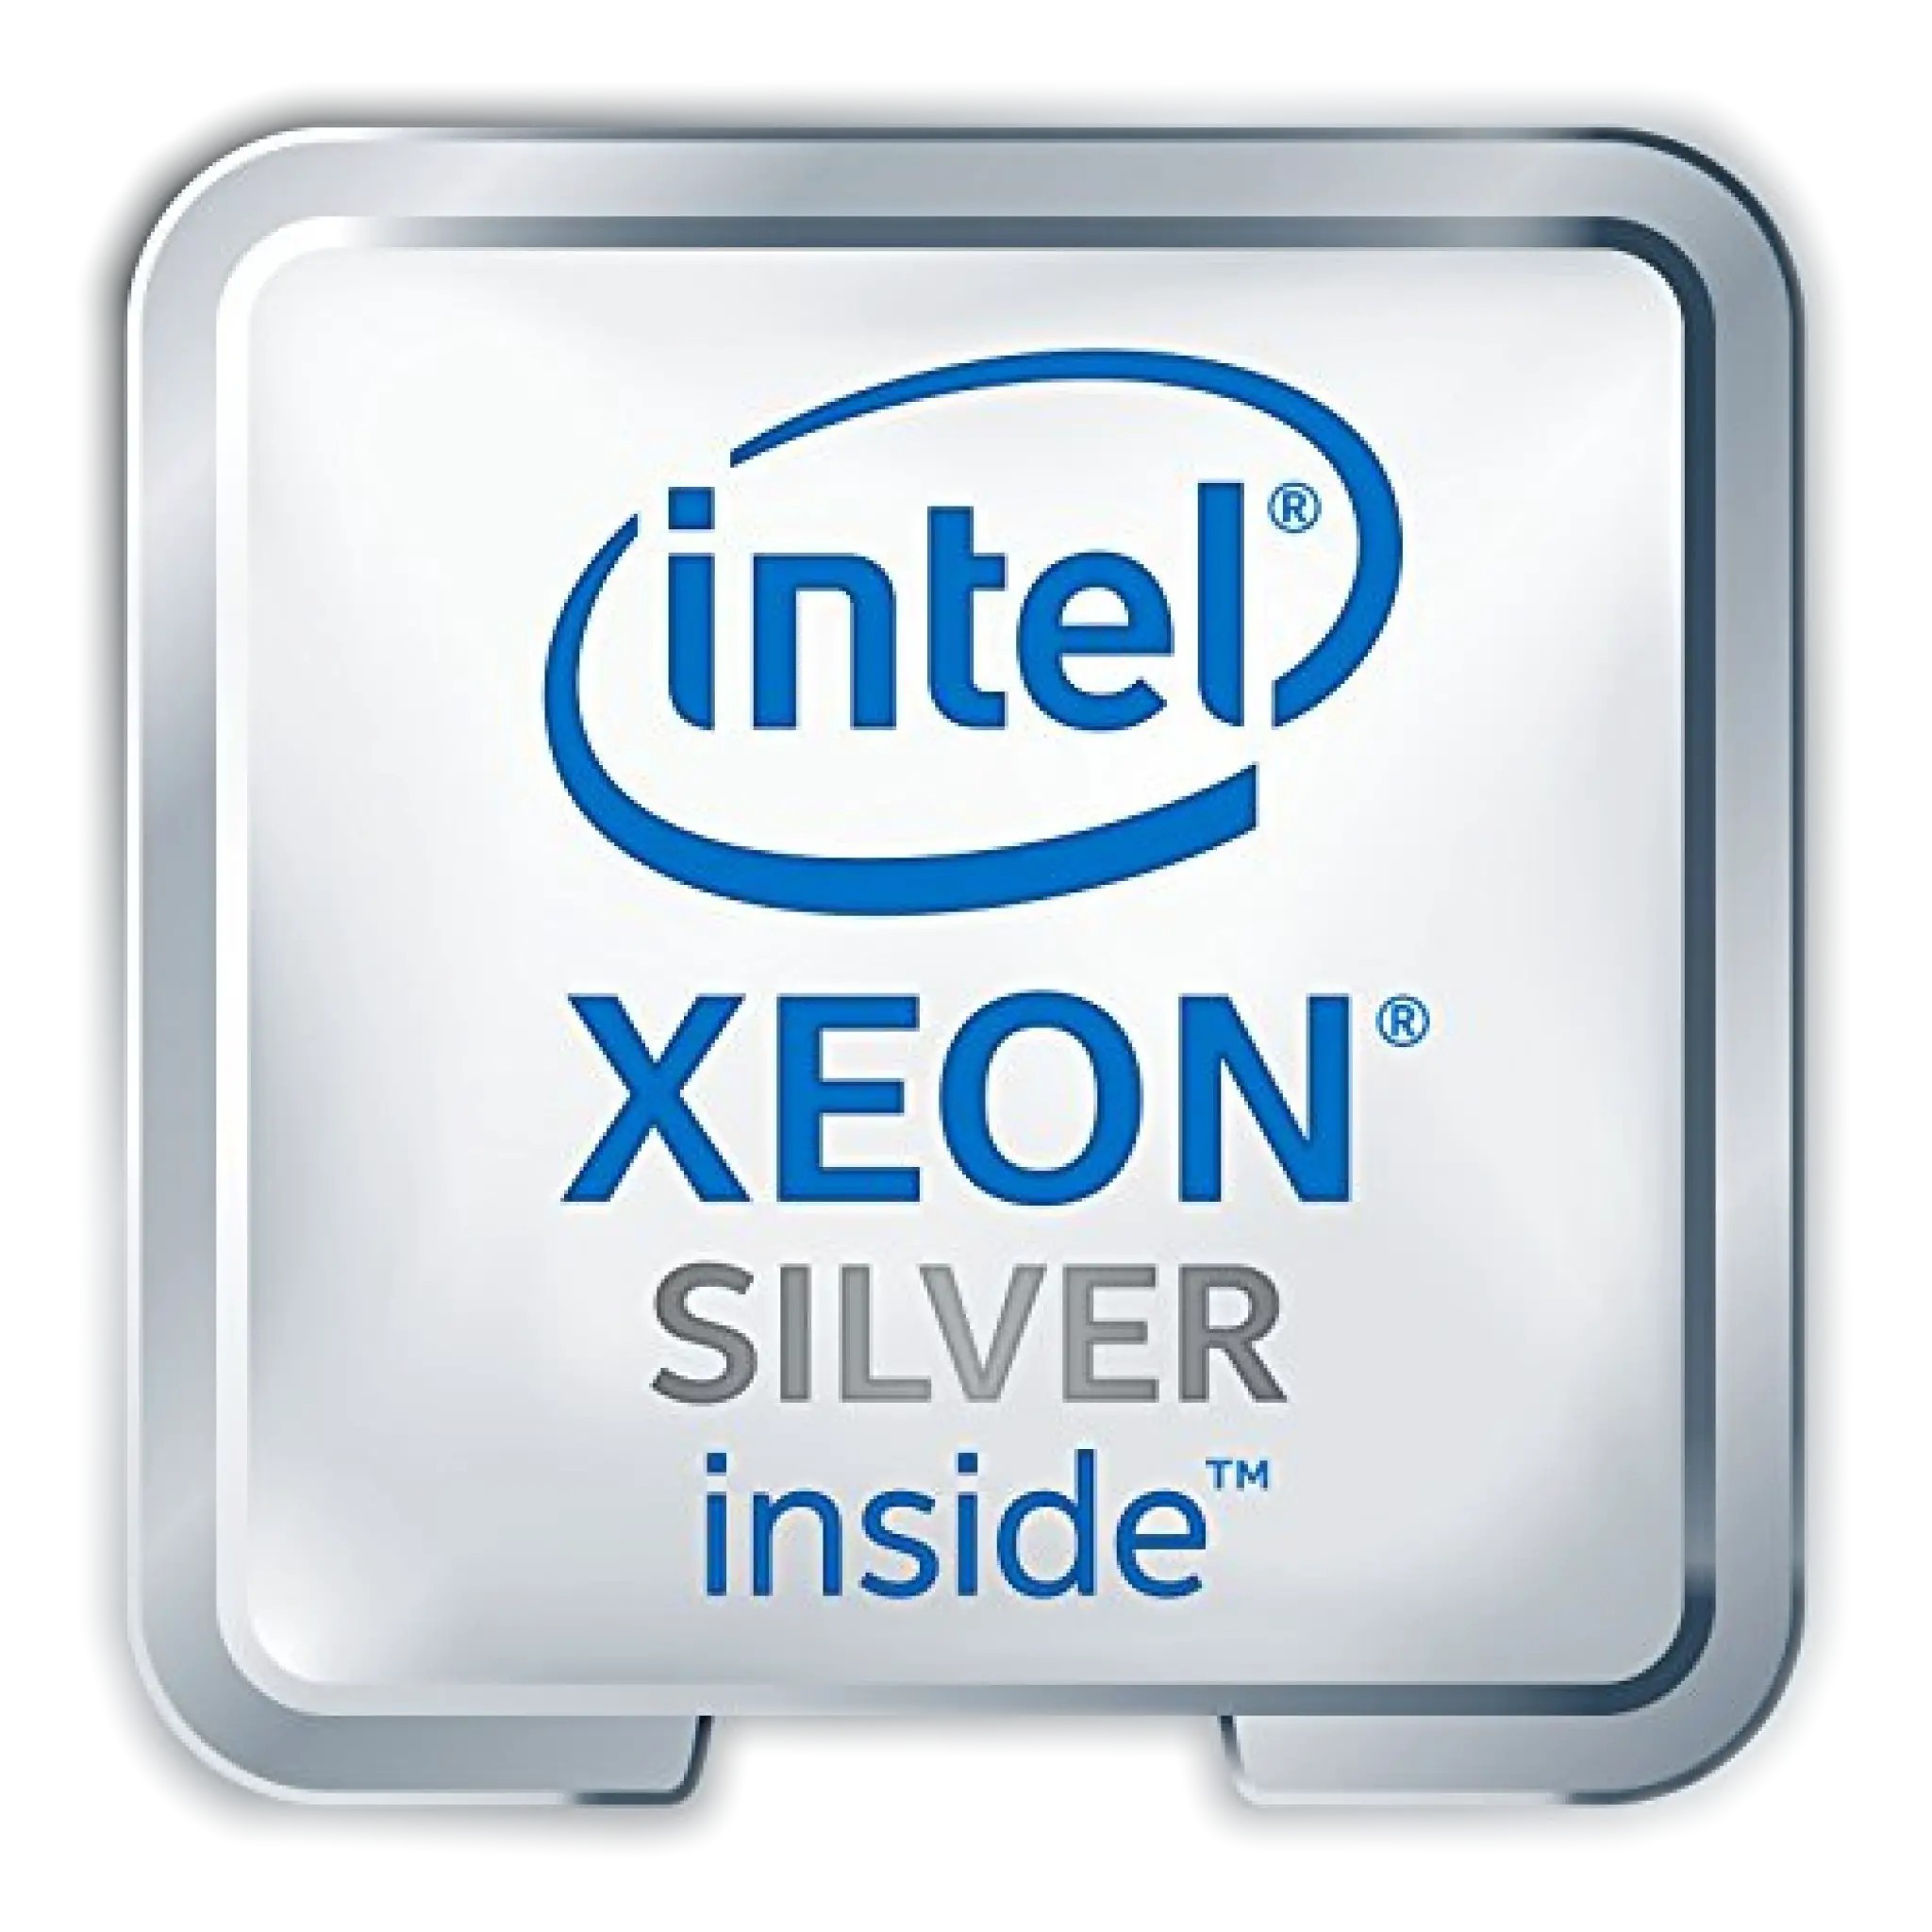 Intel Xeon Silver 4112 2.6GHz 4C 8T 8.25M Cache Sockets FCLGA3647 SR3GN